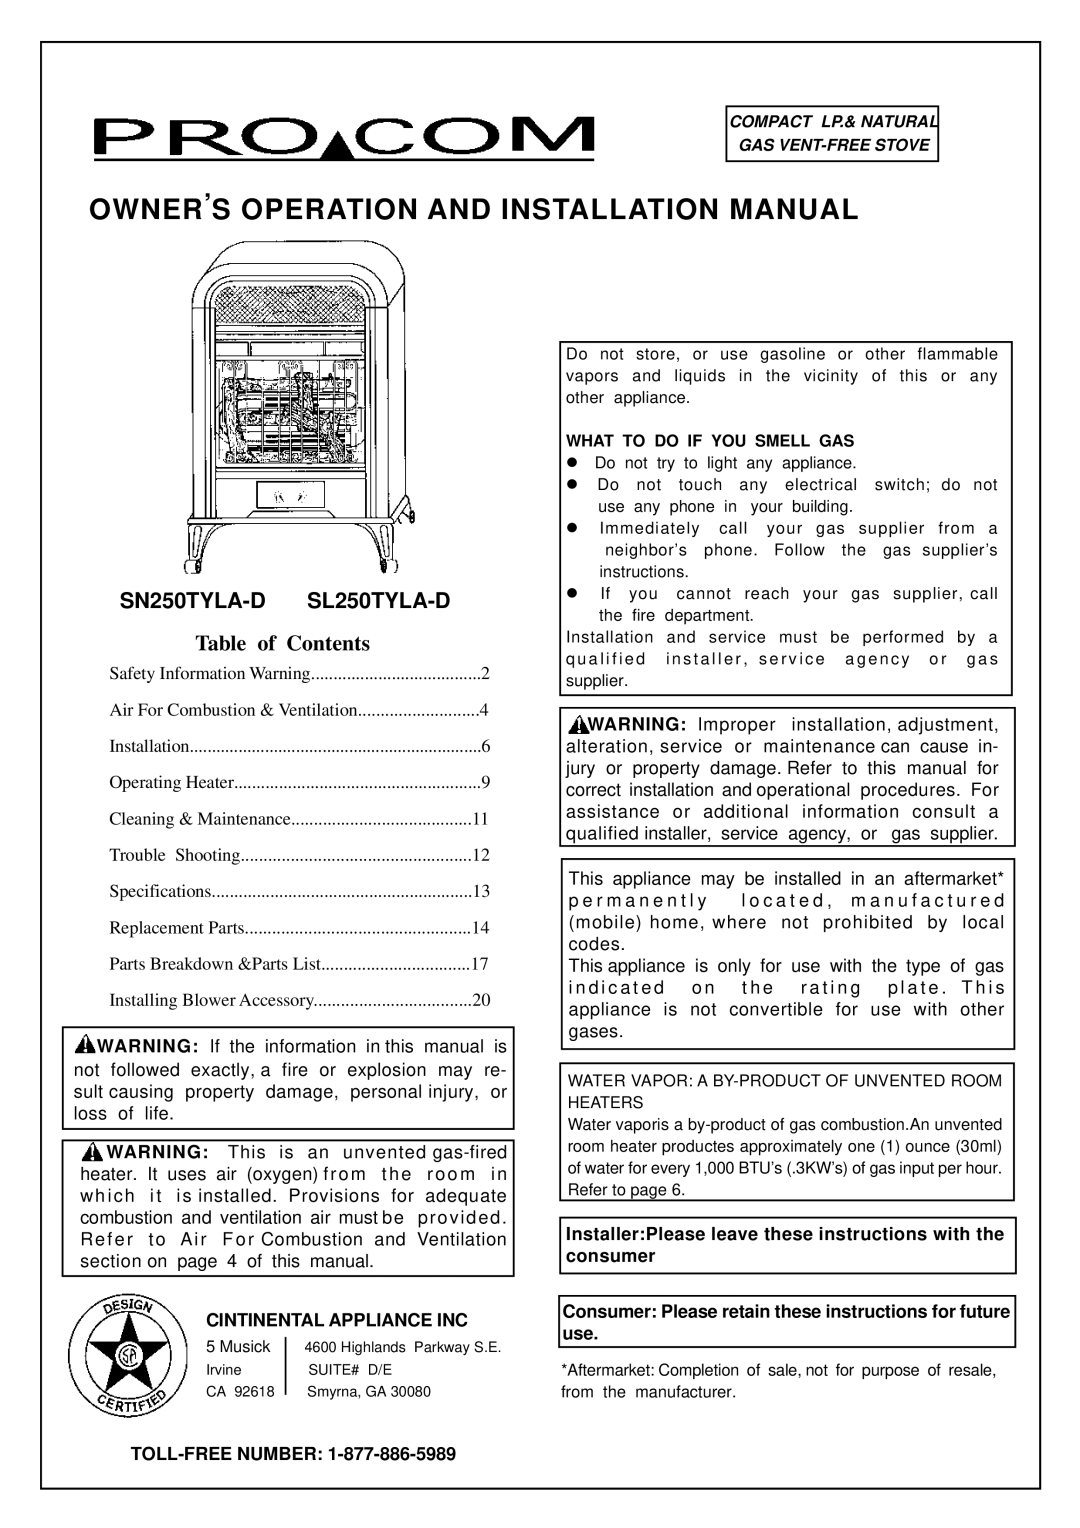 Procom SN250TYLA-D installation manual SL250TYLA-D, Owner’S Operation And Installation Manual, Table of Contents 